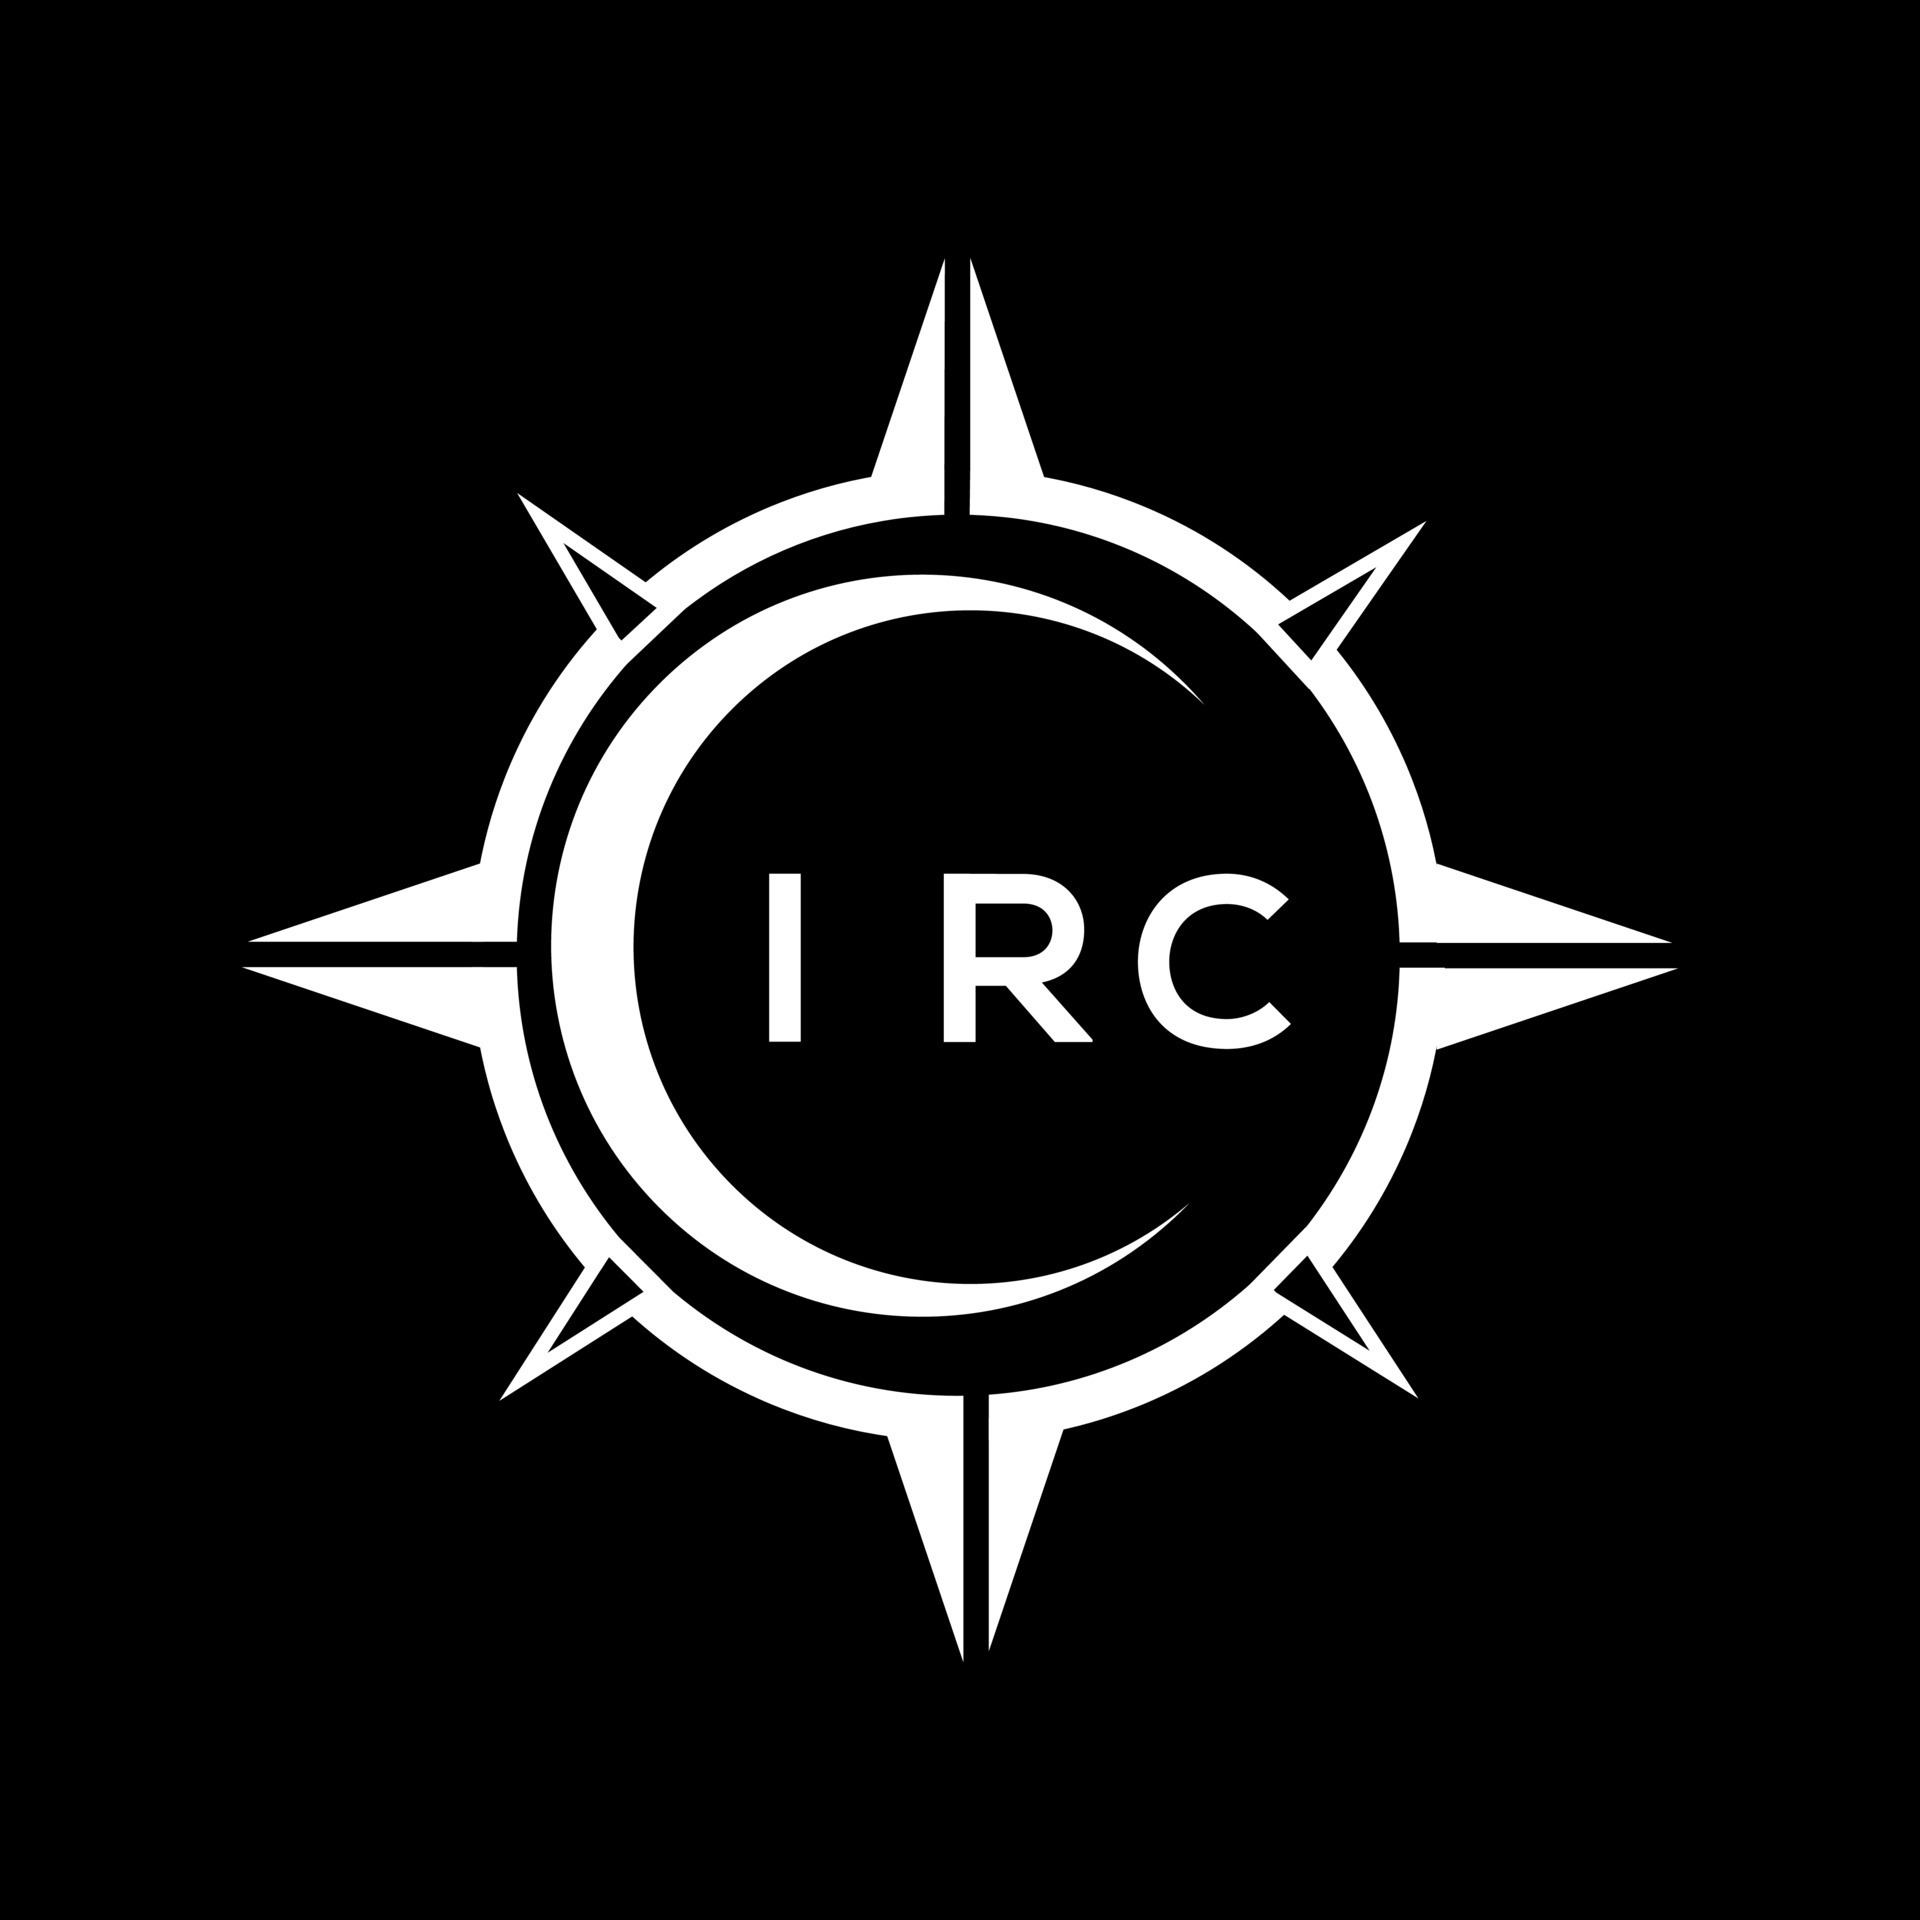 Irc logo | Logo & brand identity pack contest | 99designs